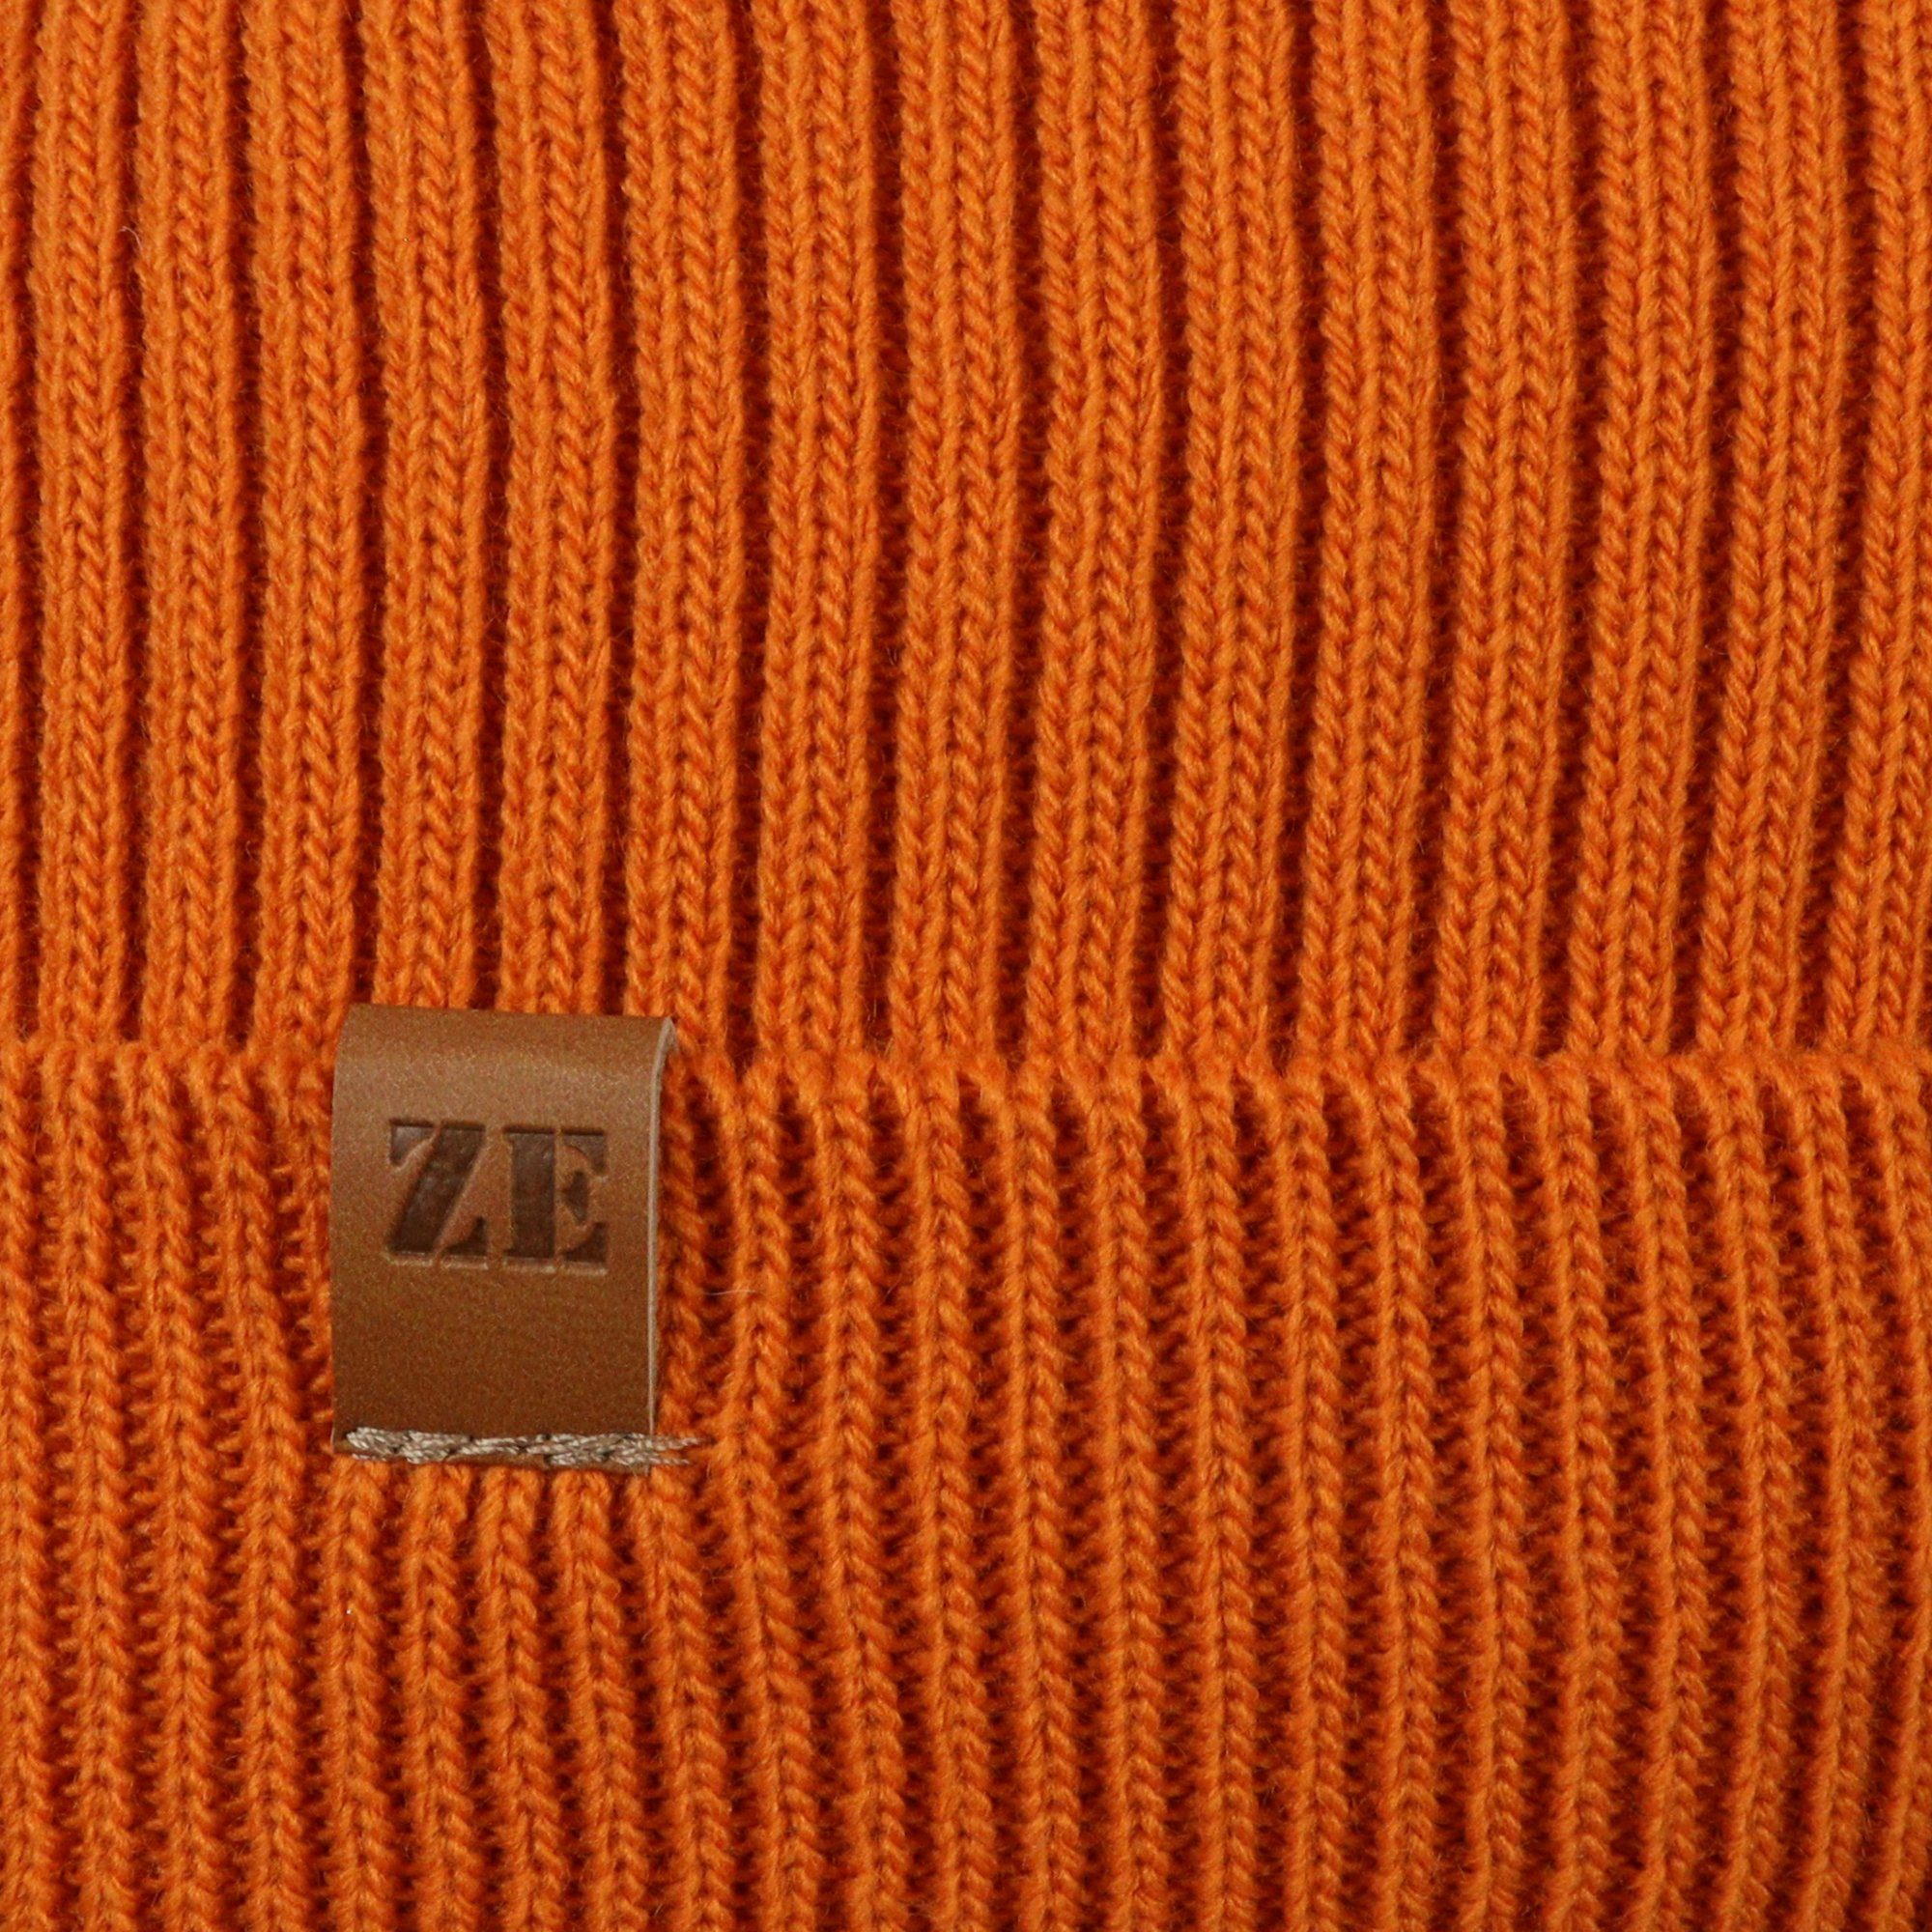 Mütze ZEBRO orange Strickmütze Kira